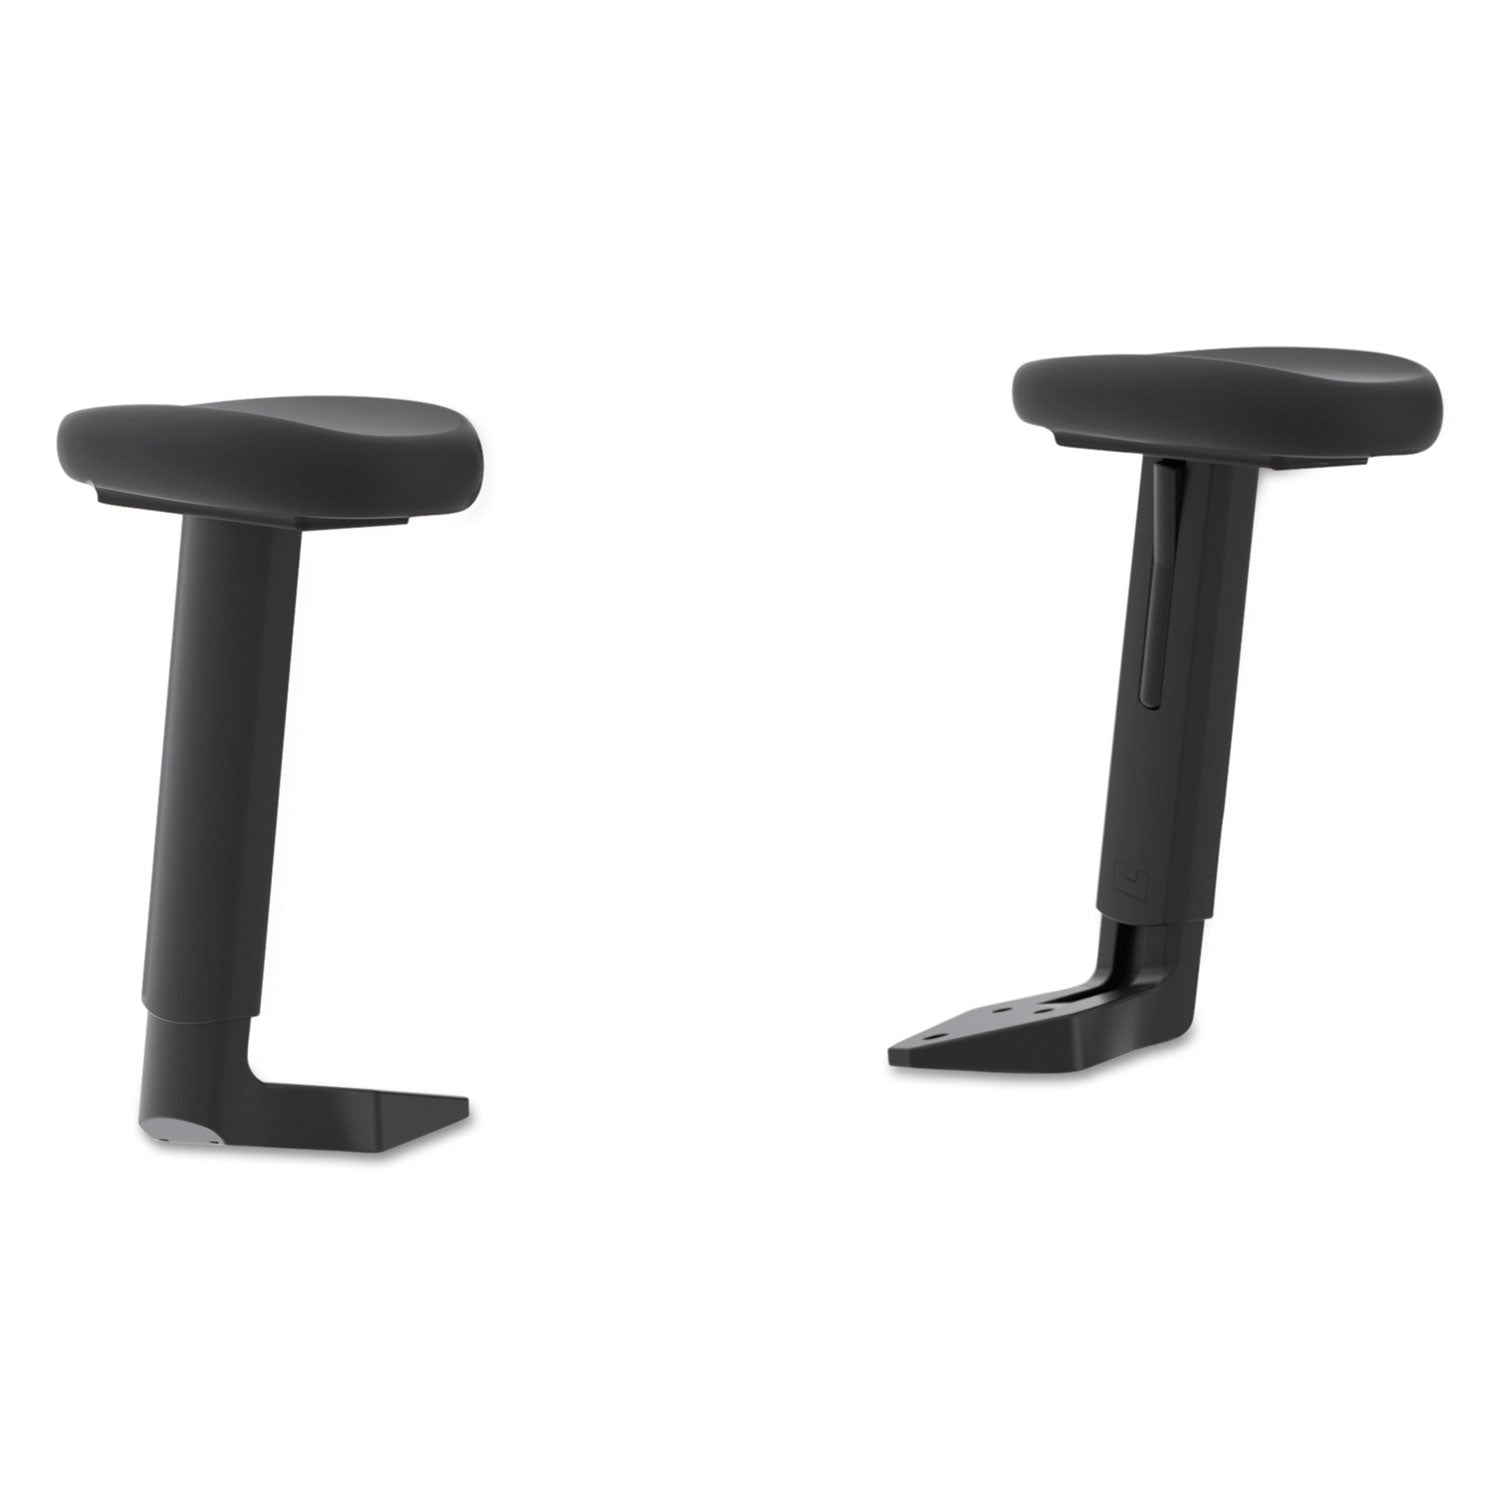 valutask-height-adjustable-arm-kit-for-hon-valutask-chairs-4-x-1025-x-1188-black-2-set_bsxvl995 - 1